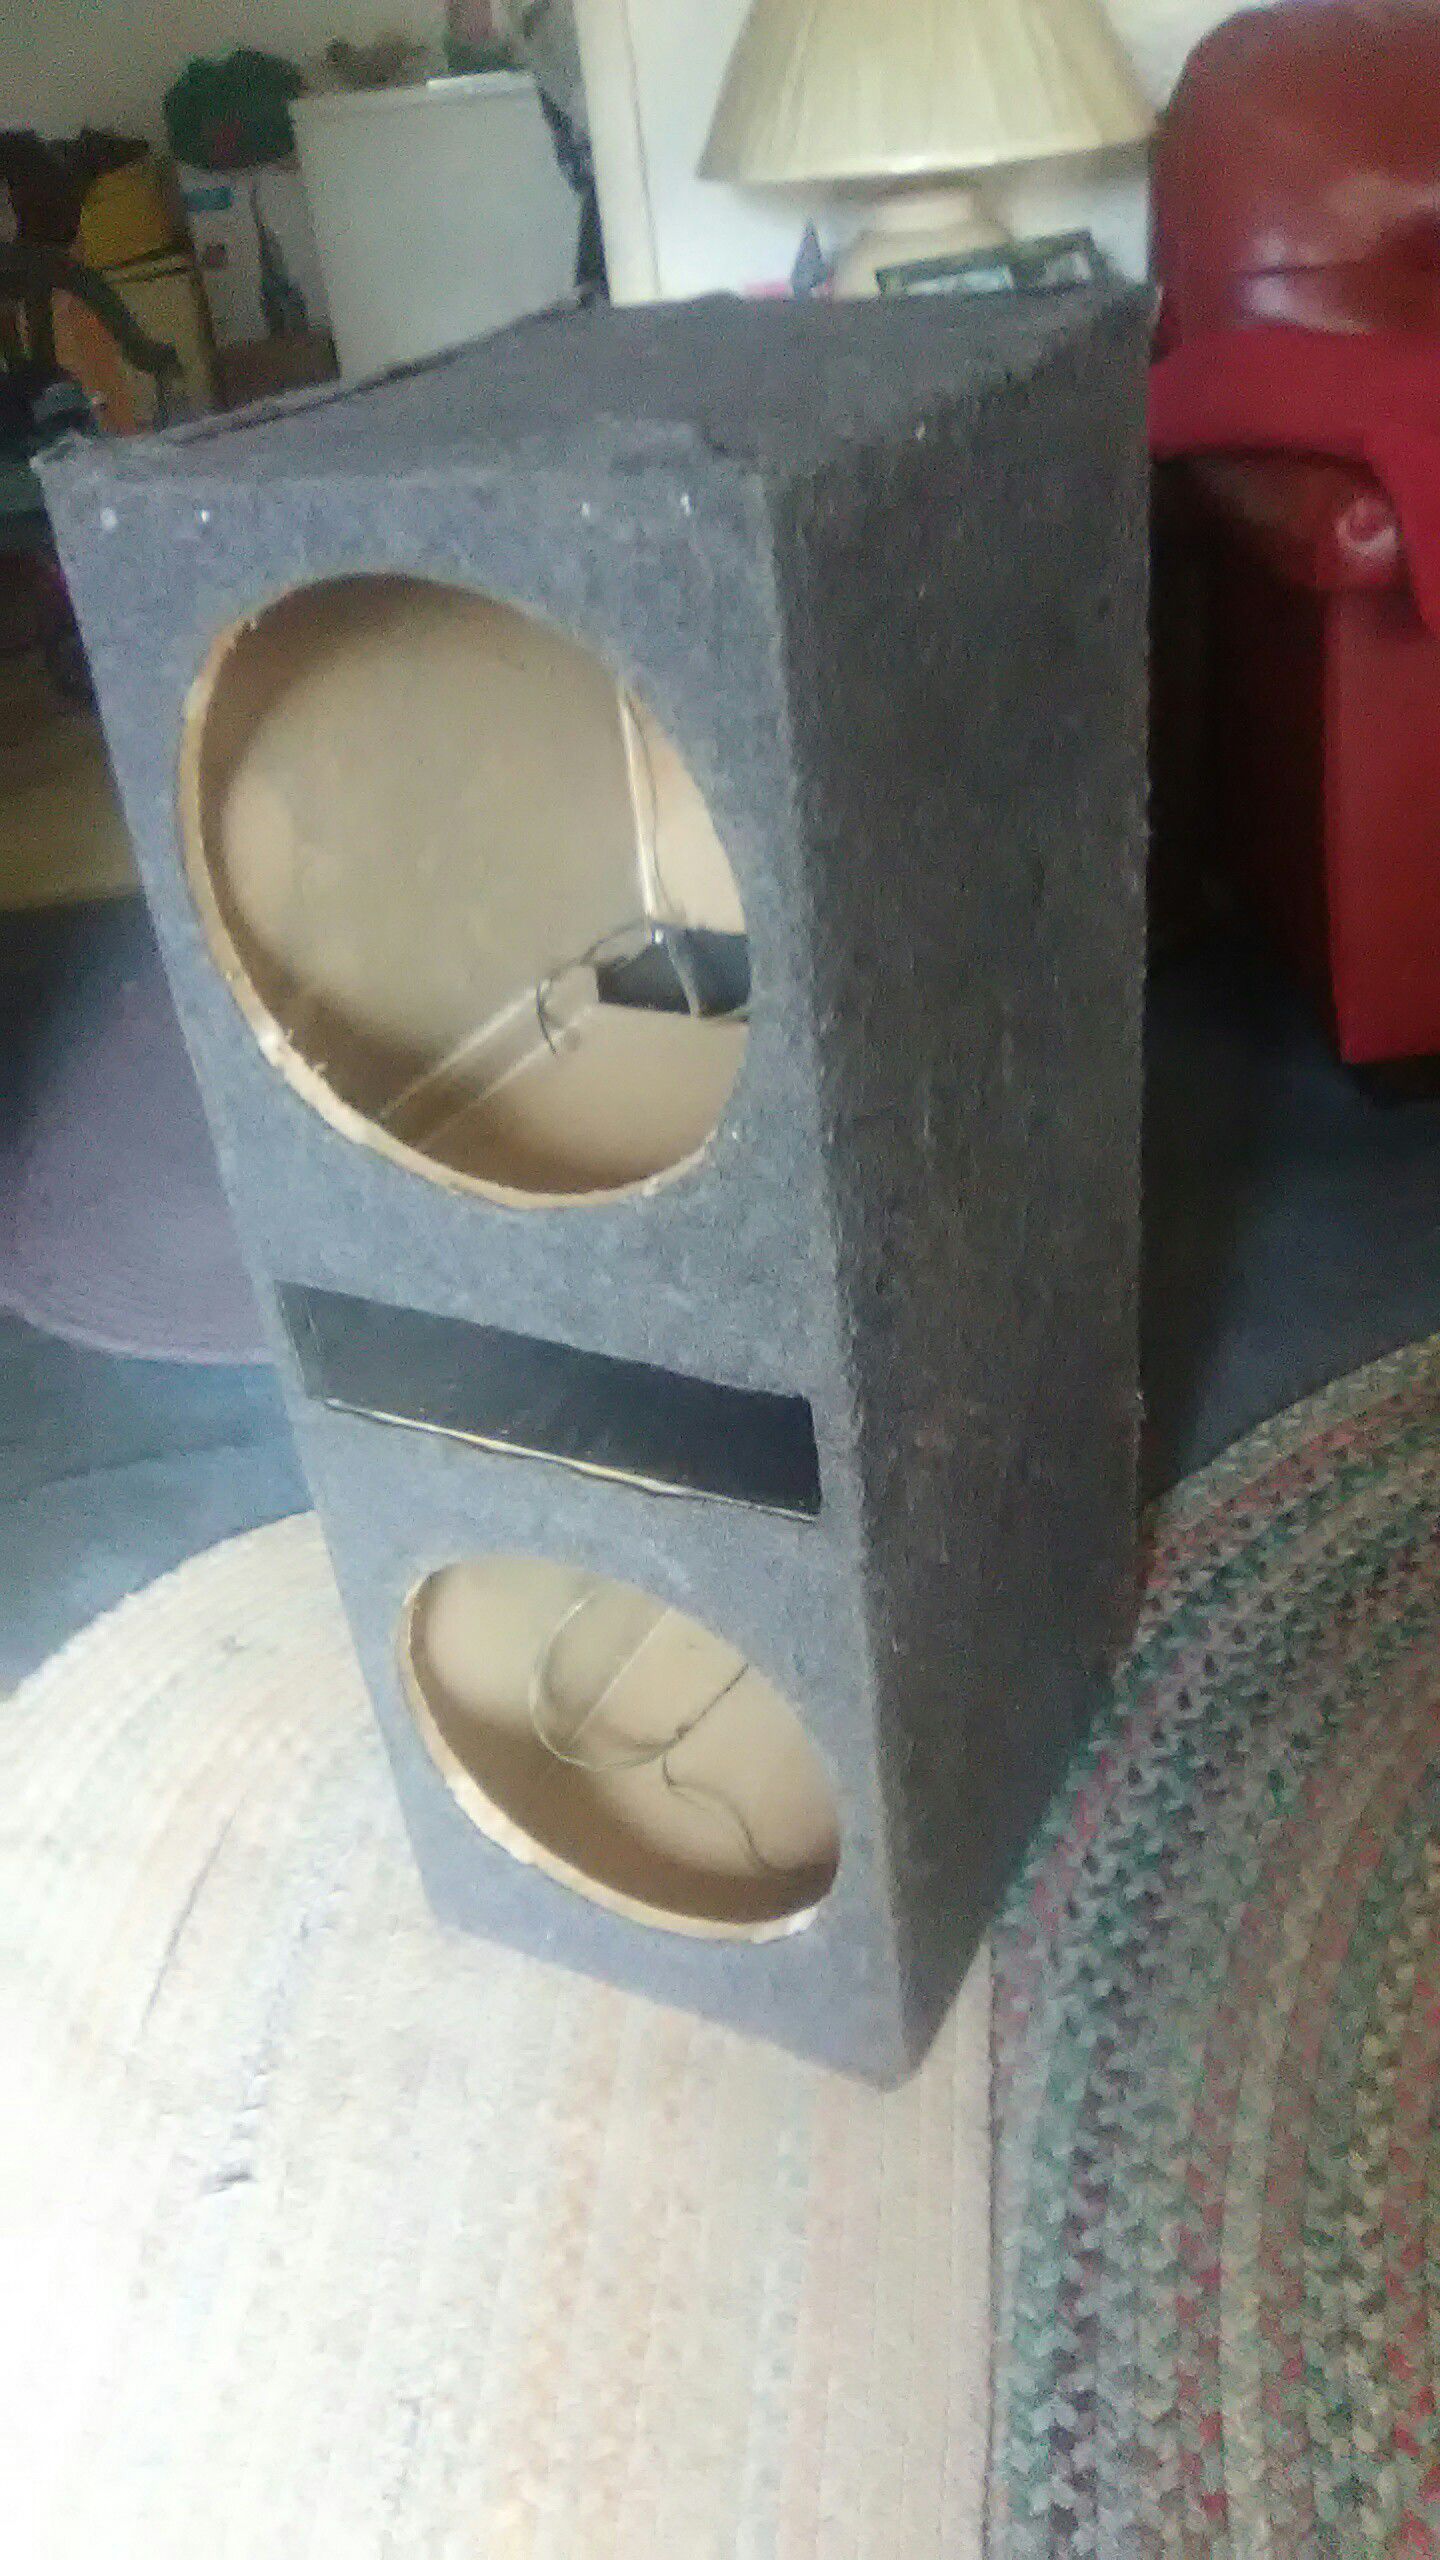 3 foot speaker box